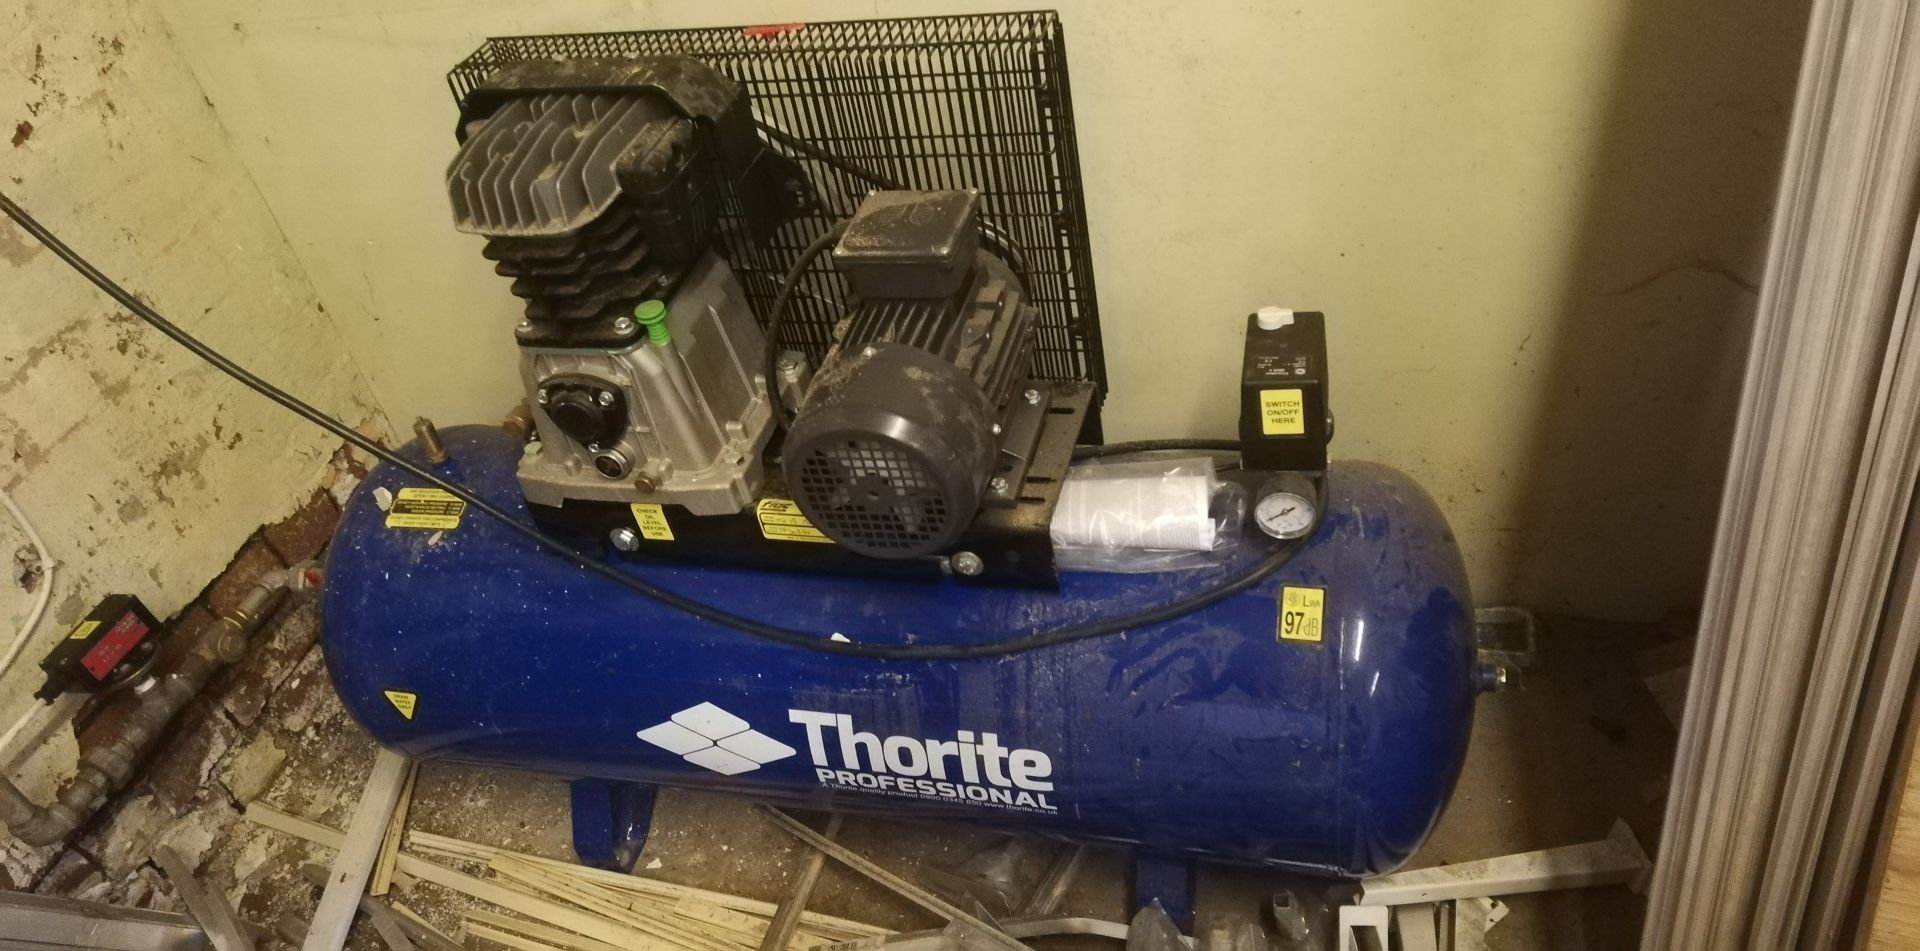 Thorite Compressor 97DB